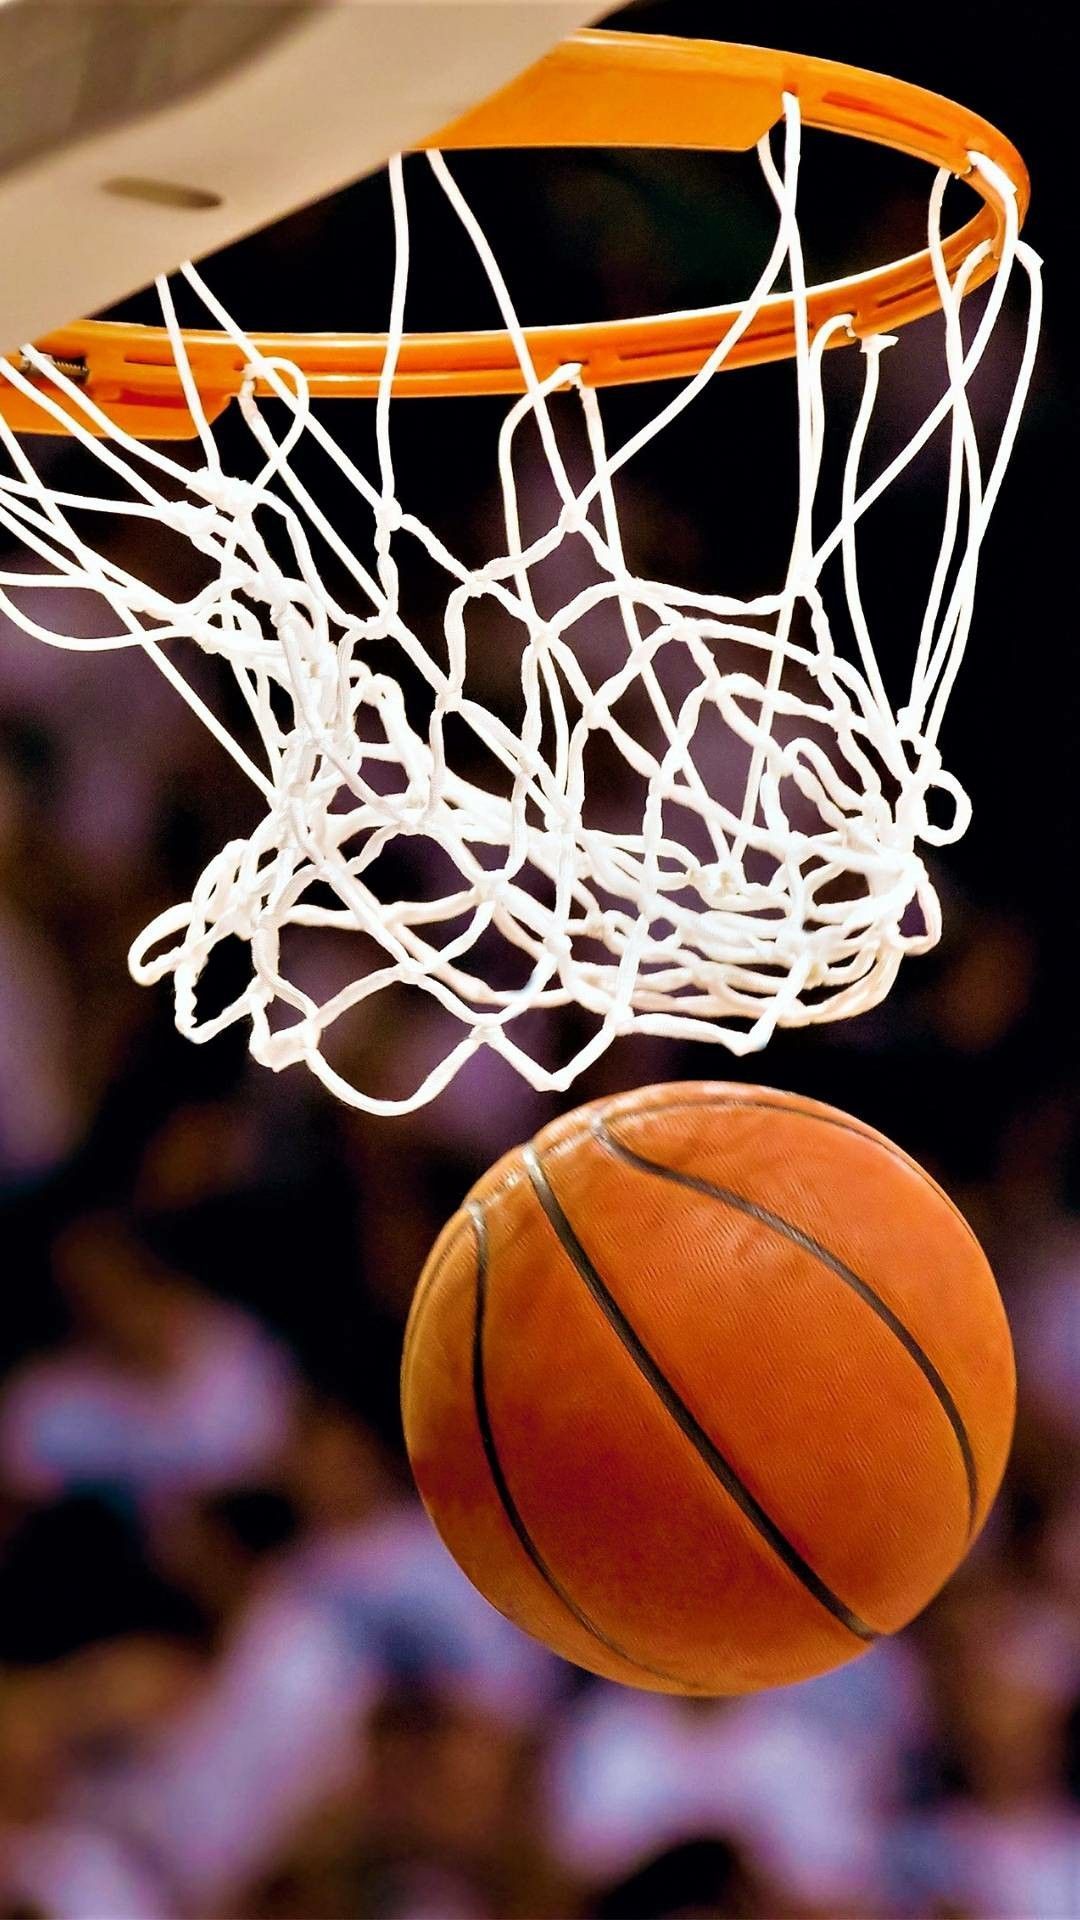 Basketball hoop wallpaper. Cool basketball wallpaper, Basketball hoop, Basketball wallpaper